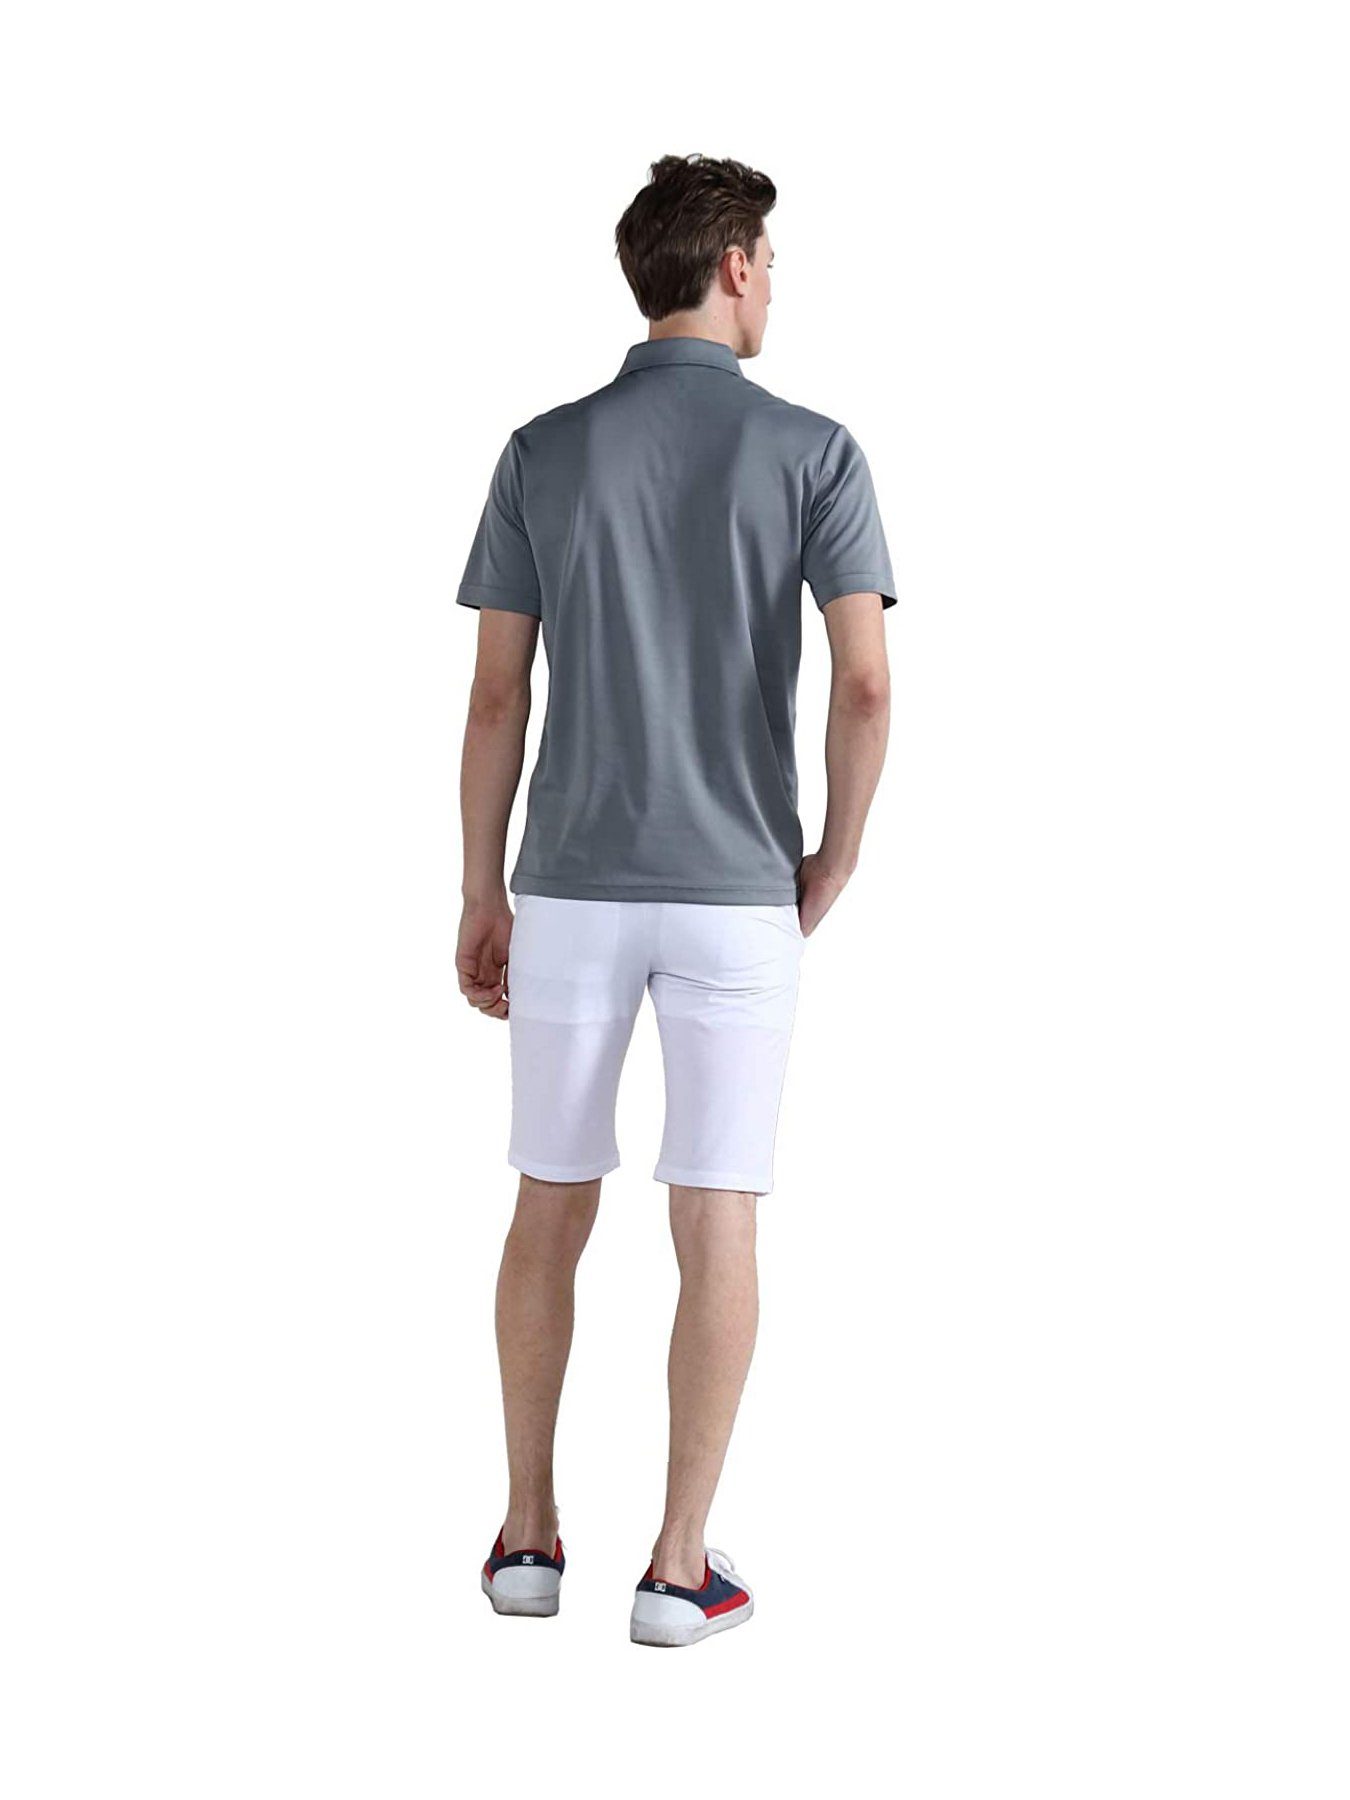 Grau Gemütlich DEBAIJIA Standard Golf Leicht Poloshirt Fit Poloshirt DEBAIJIA Herren Kurzarm